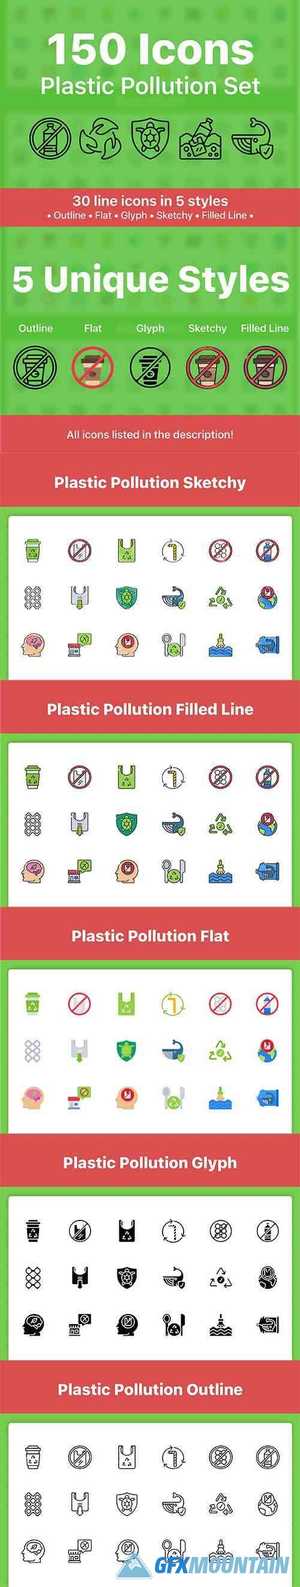 150 Plastic Pollution Icons